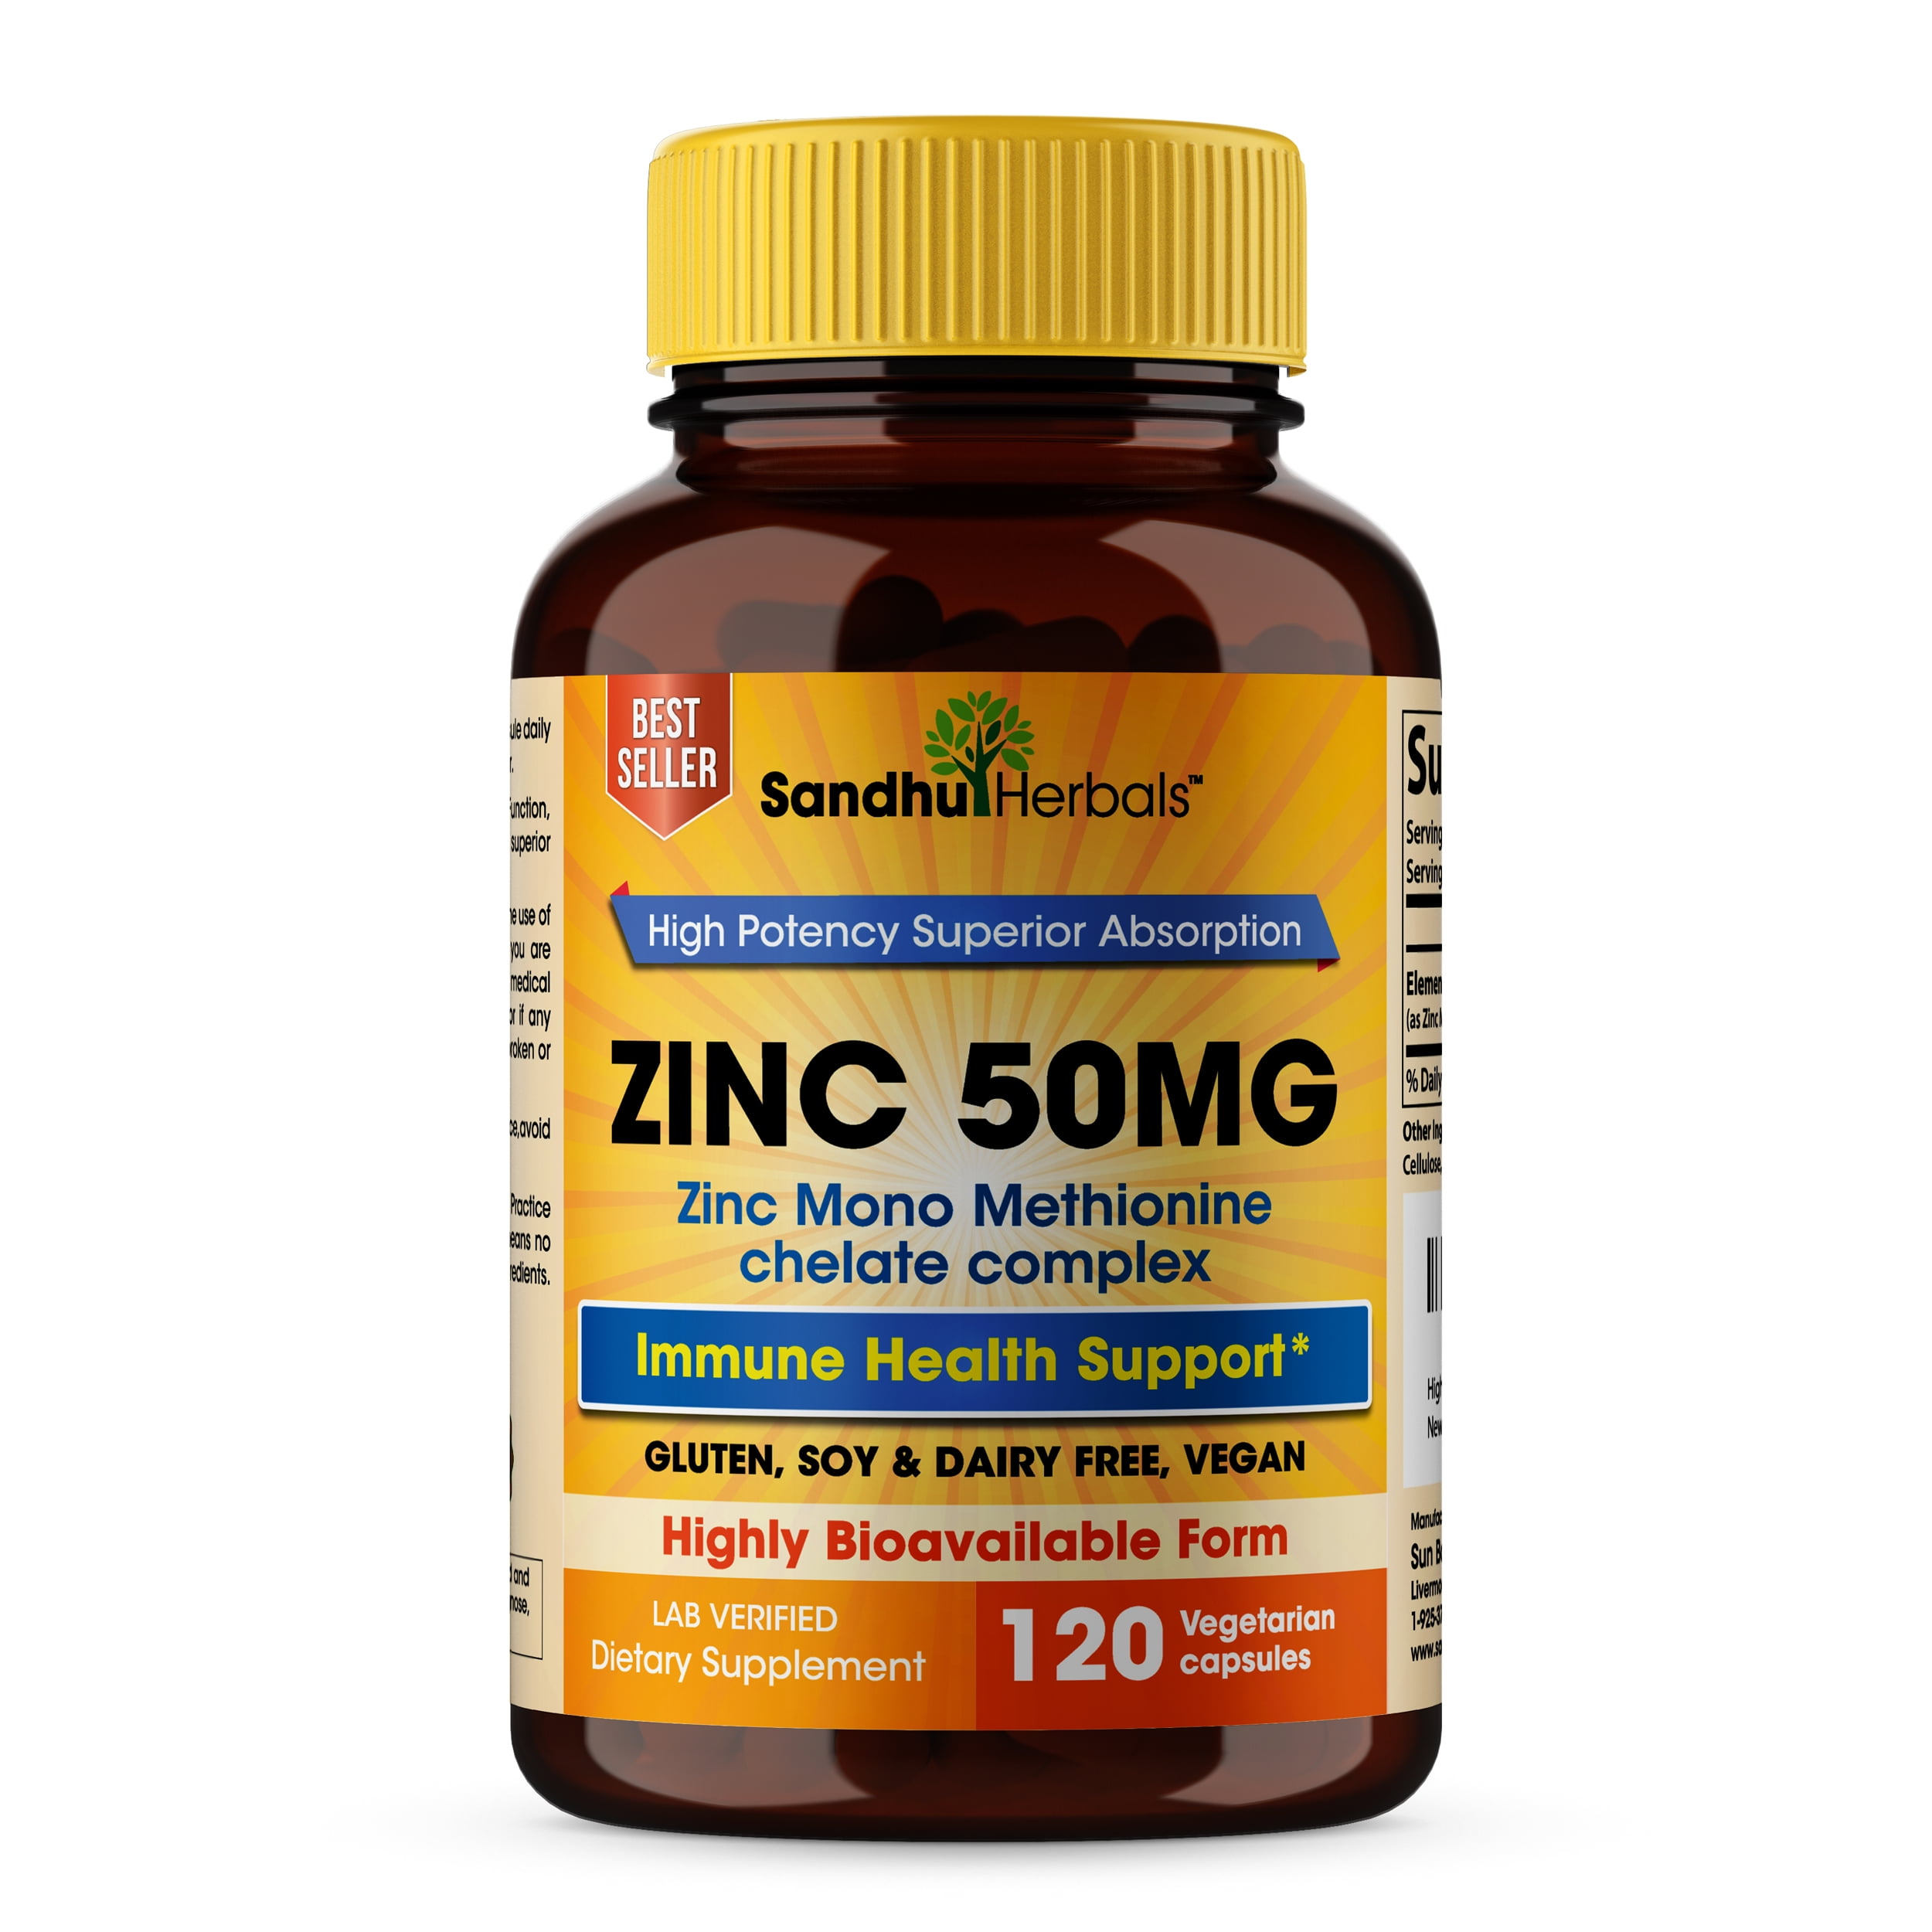 Zinc supplements